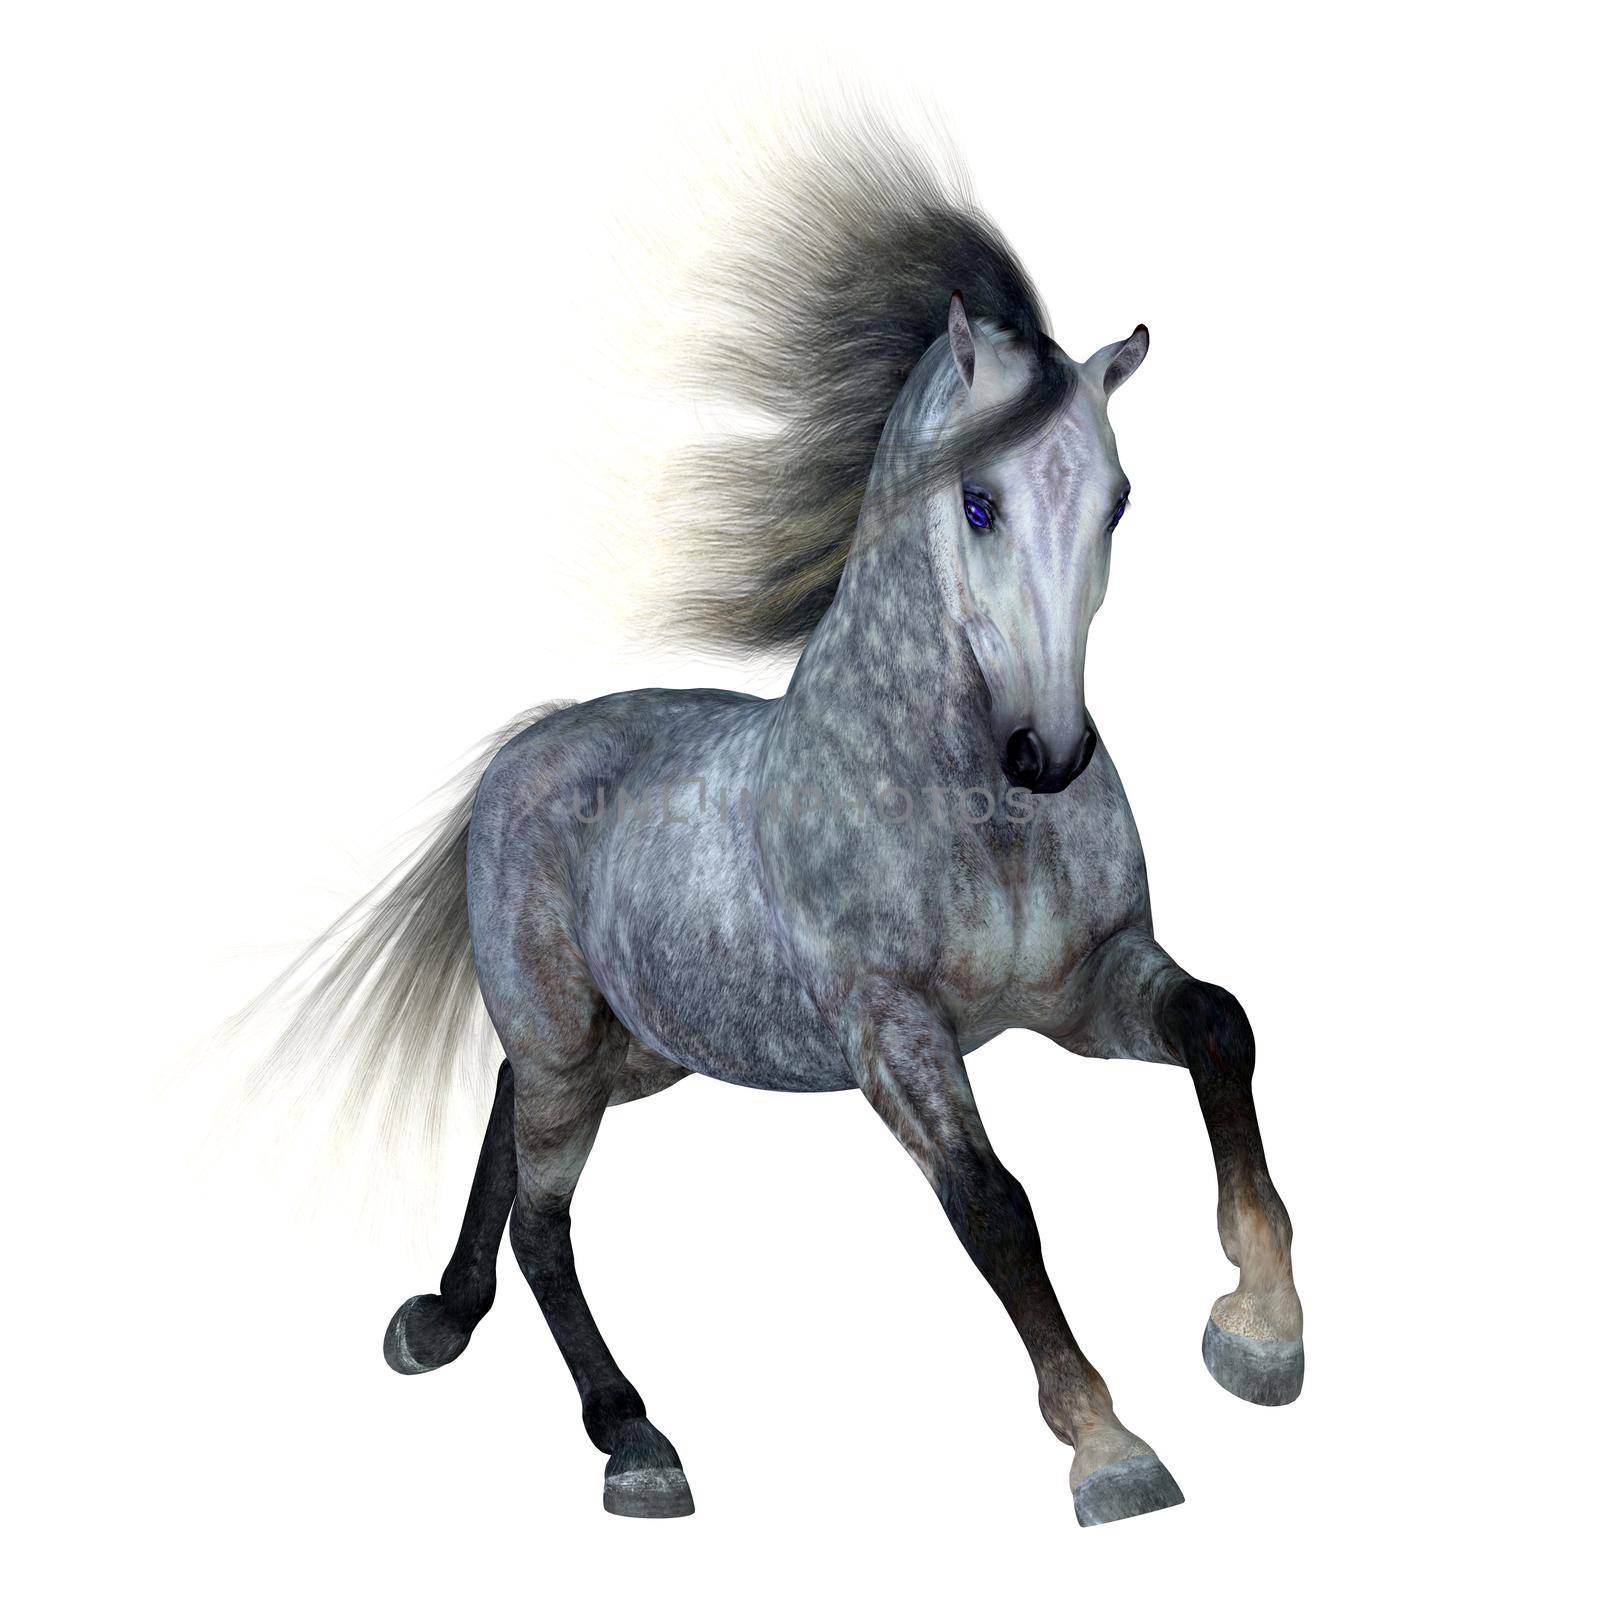 Dapple Grey Horse by Catmando